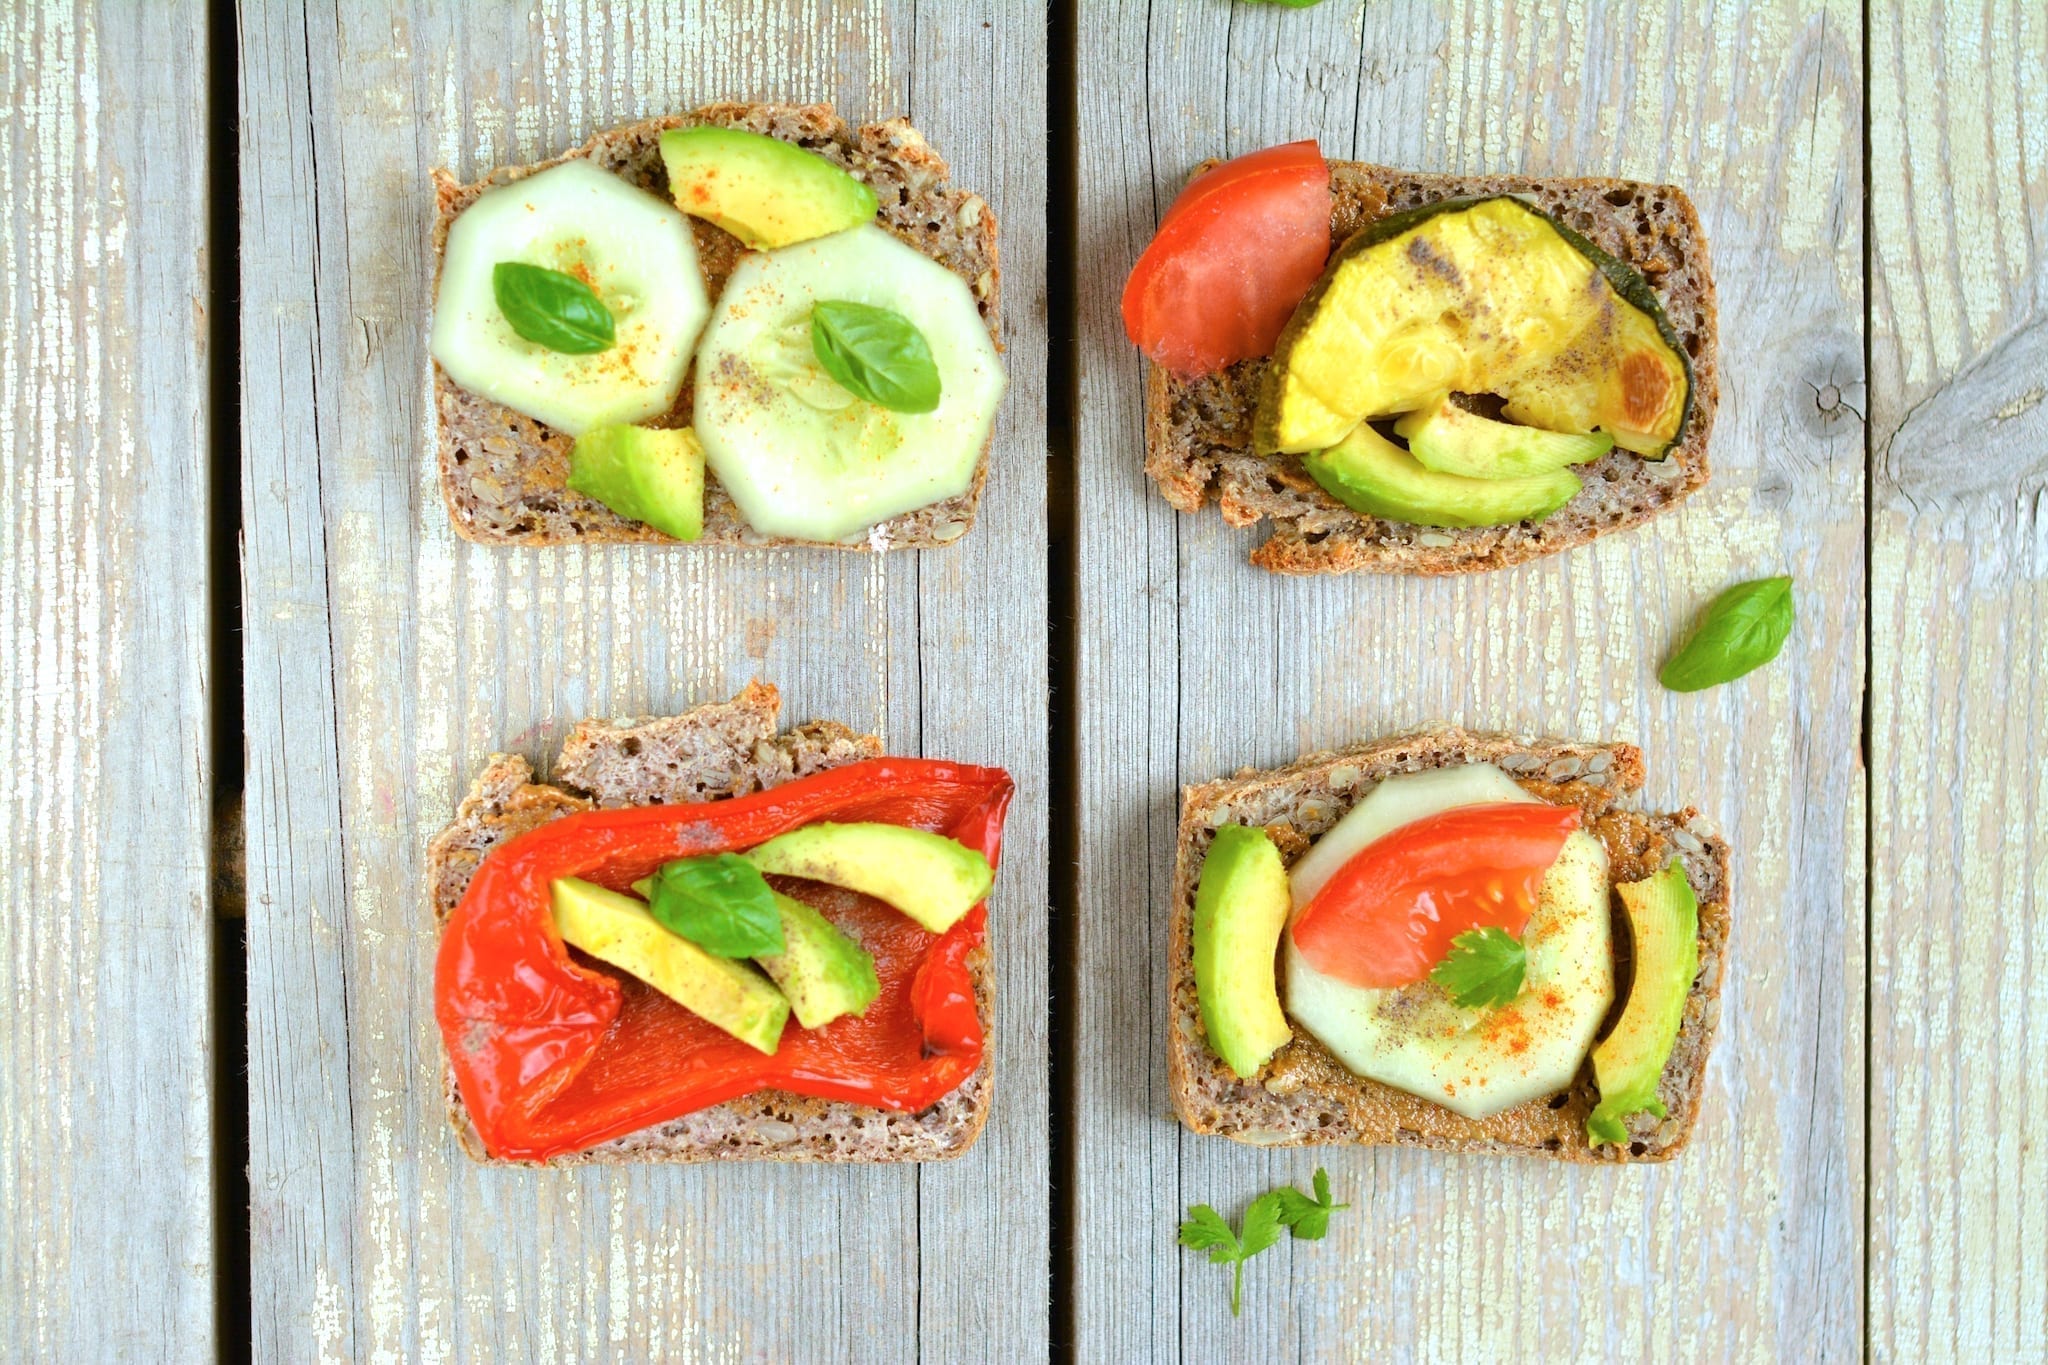 Fermented buckwheat bread sandwiches, vegan candida diet meal plans